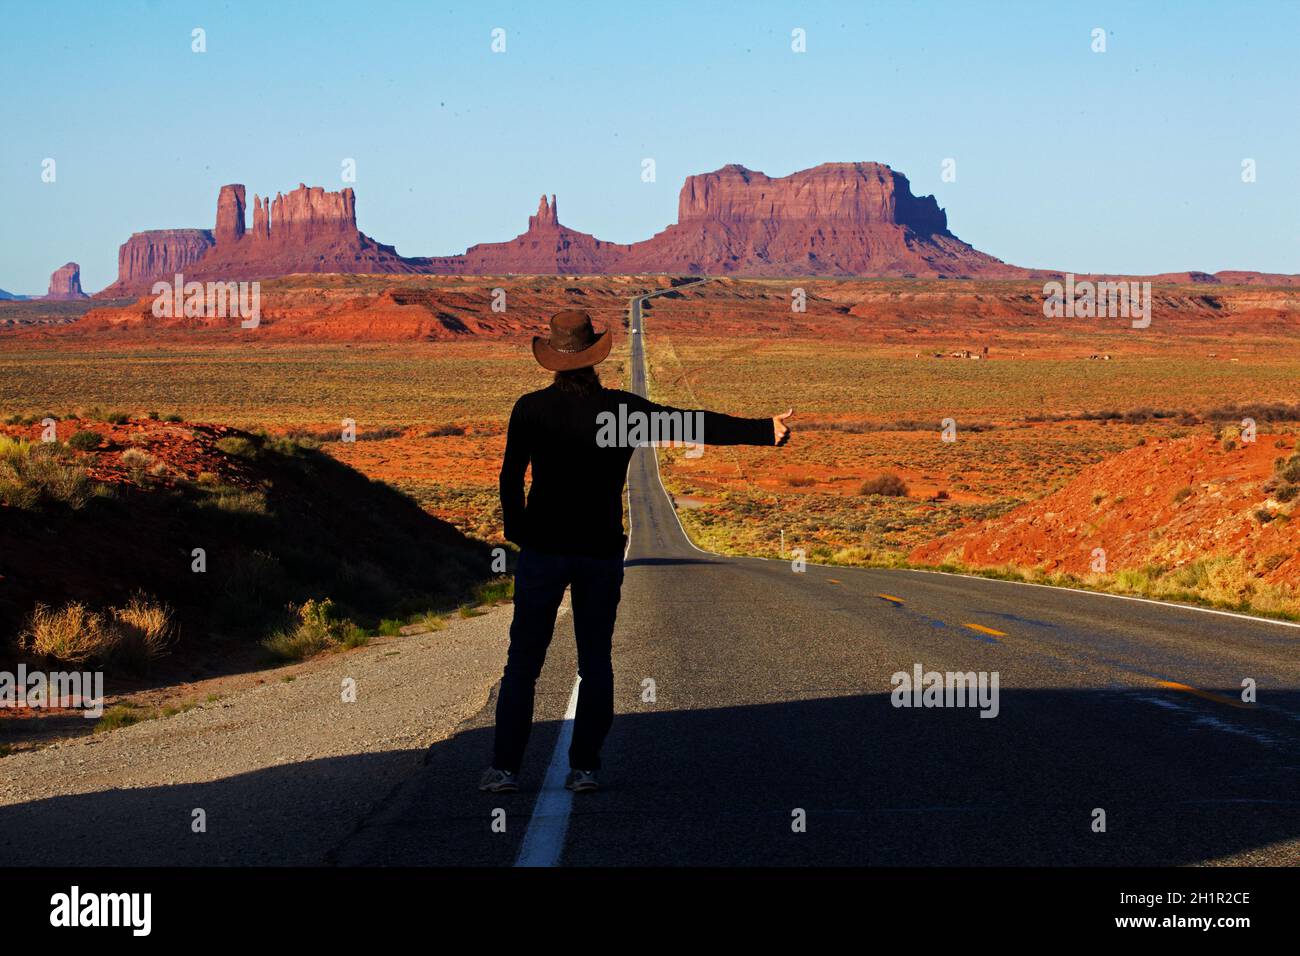 Hitch hiker on U.S. Route 163 heading towards Monument Valley, Navajo Nation, Utah, near Arizona Border, USA (model released) Stock Photo